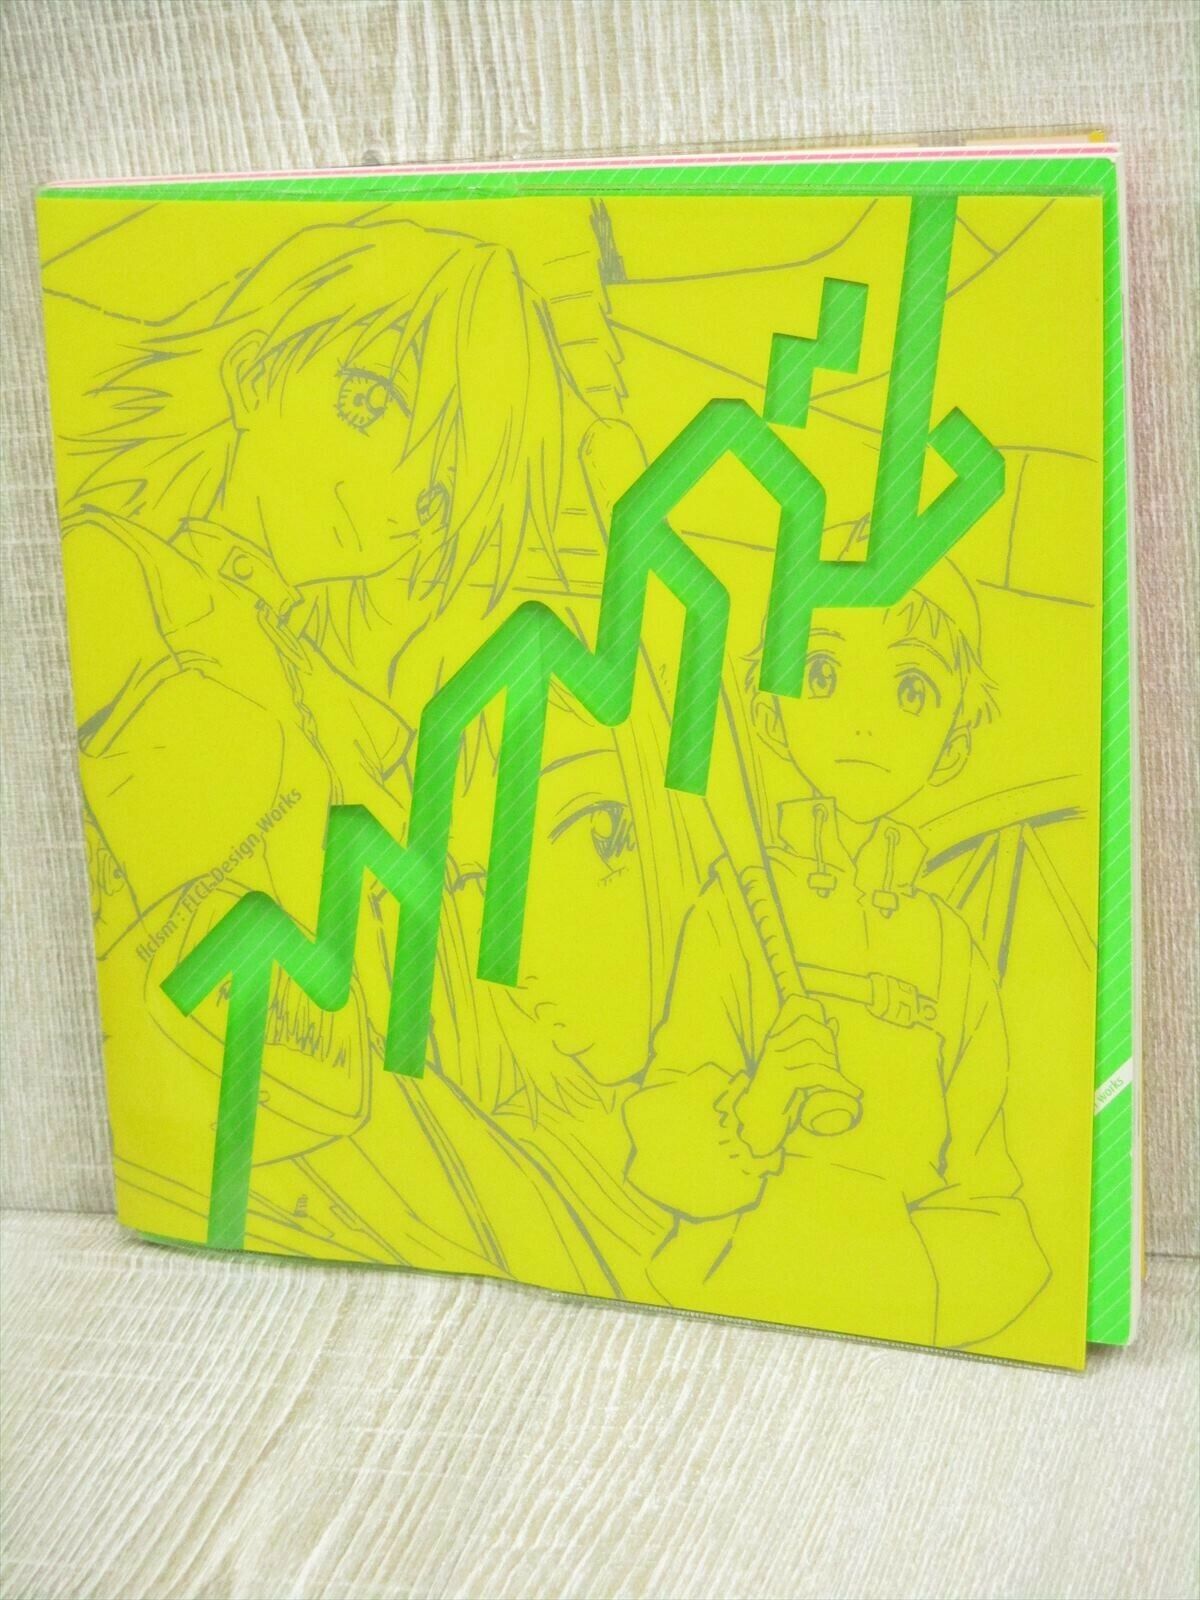 FLCL Design Works FLCLSM Flclism OVA Art Works Yoshiyuki Sadamoto Book 2001 KD